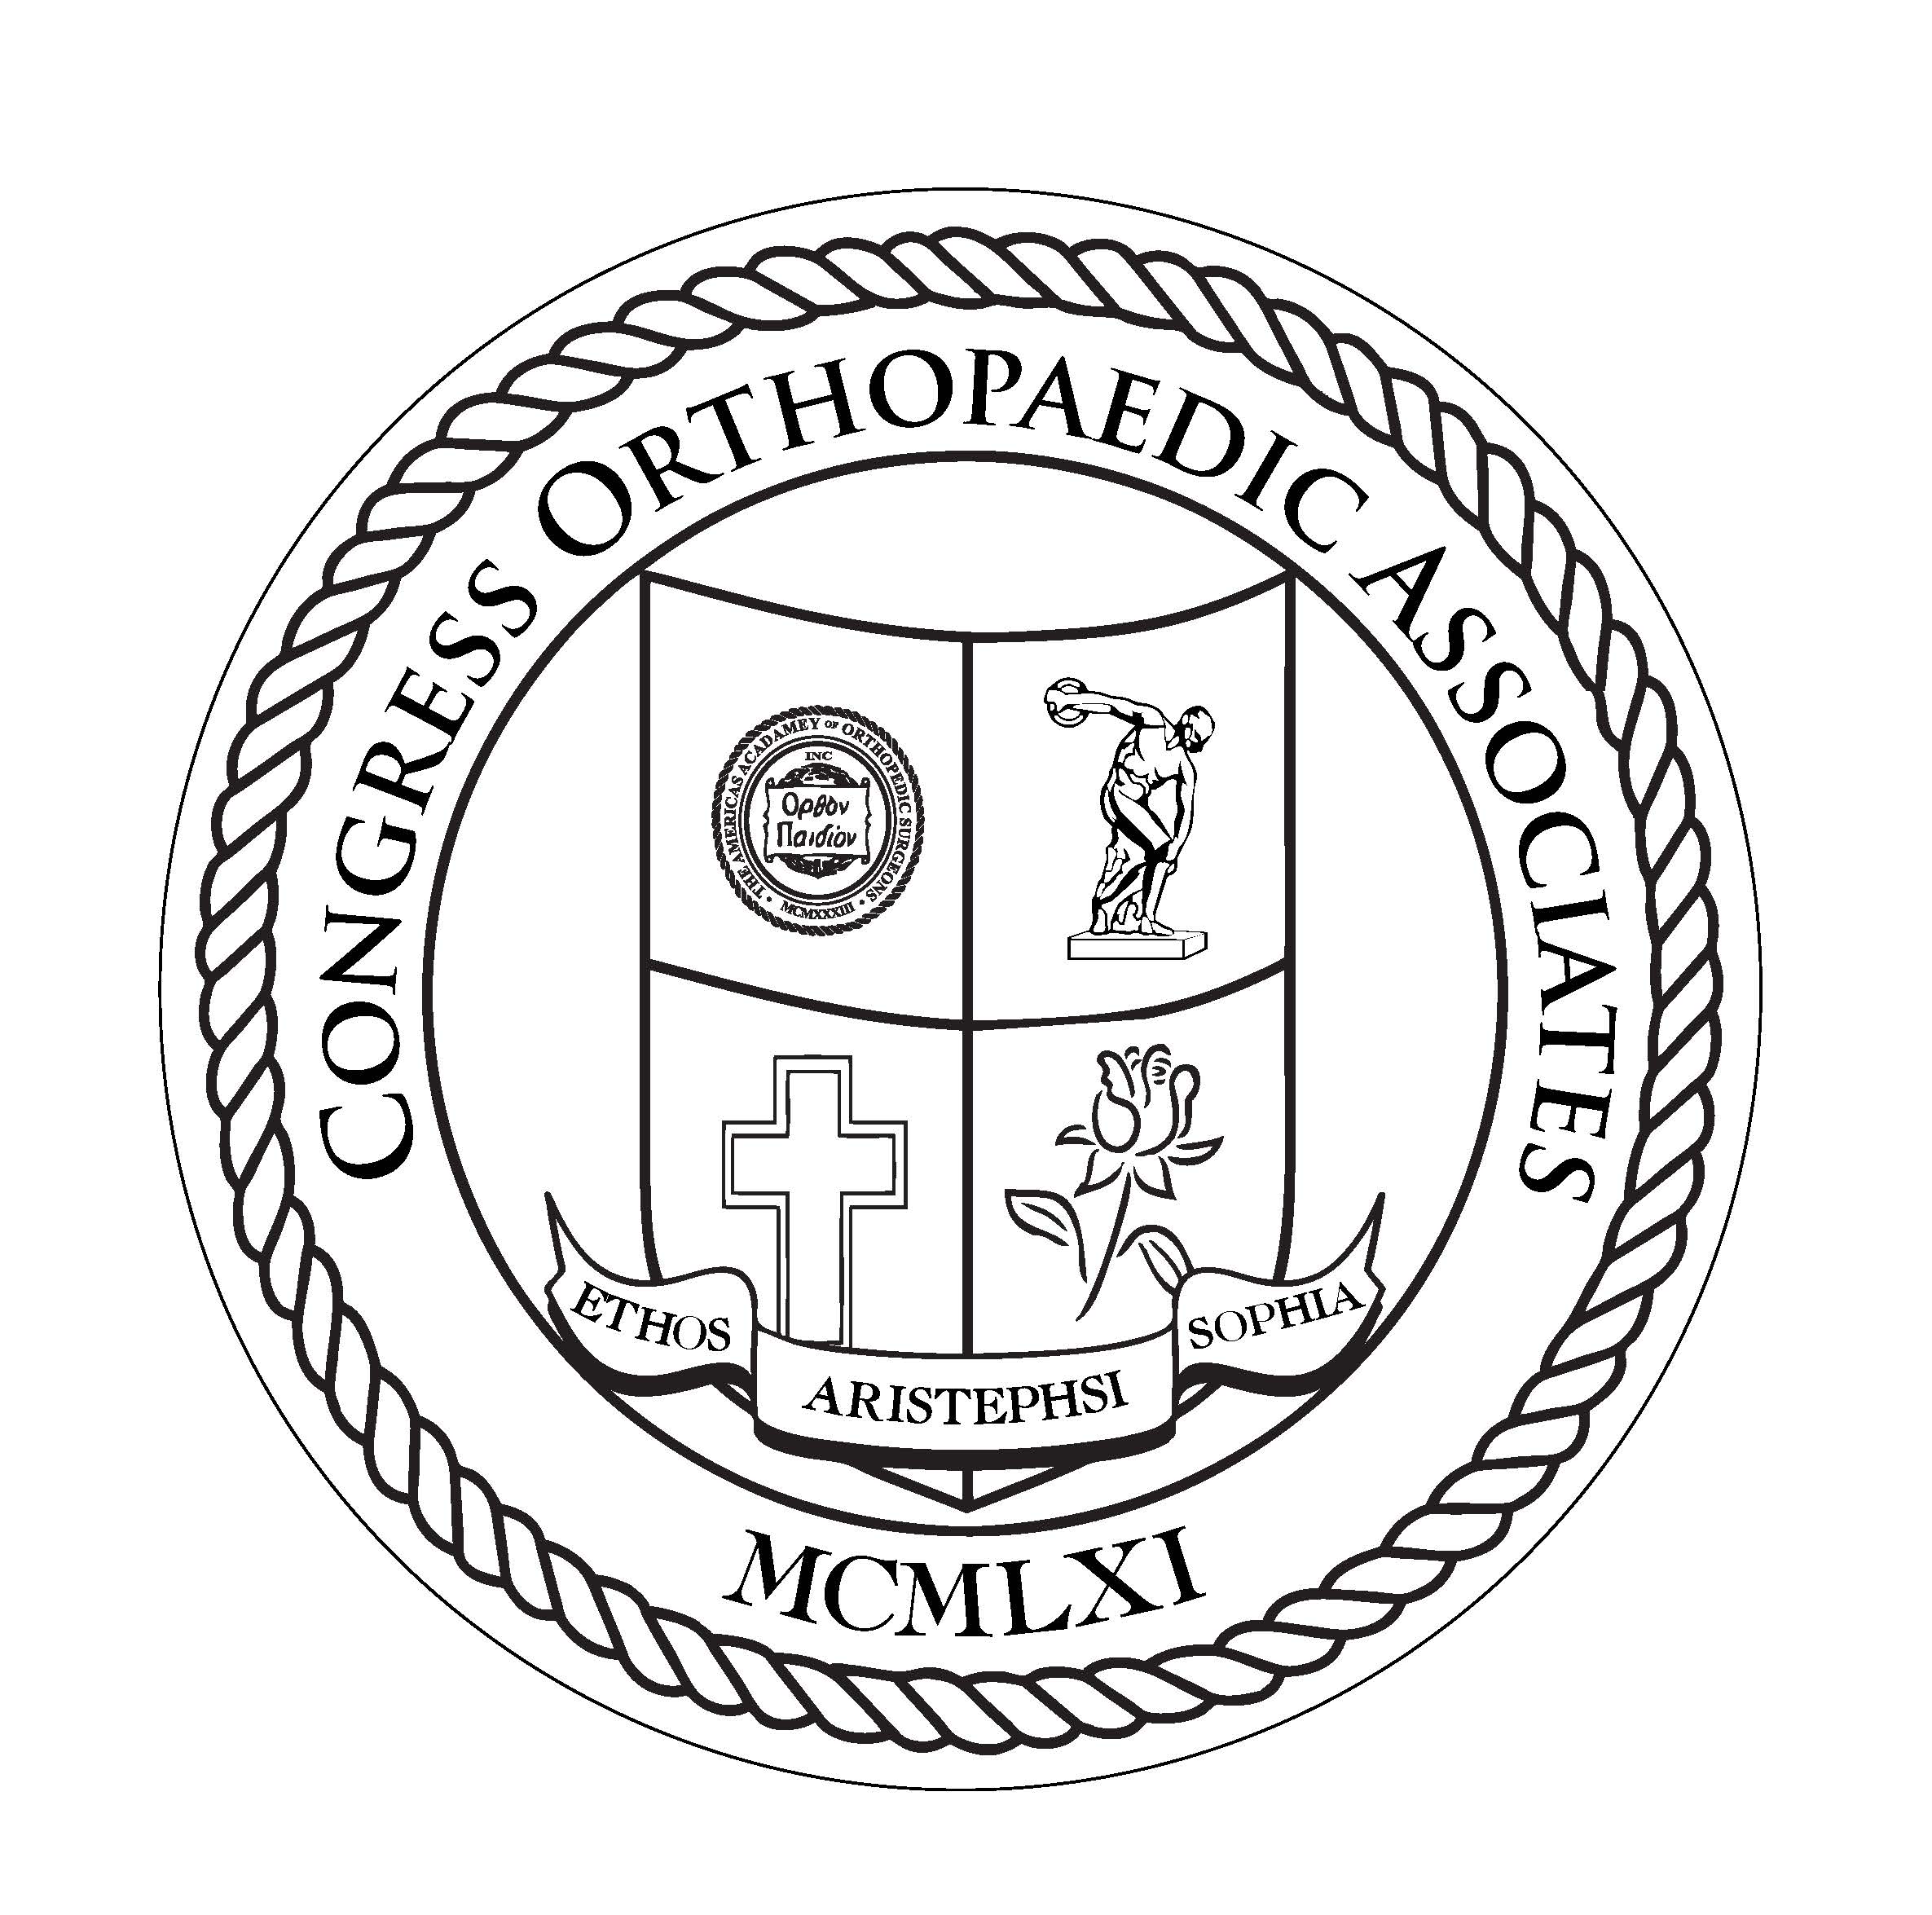 Smcc Logo - Our Members | smcc